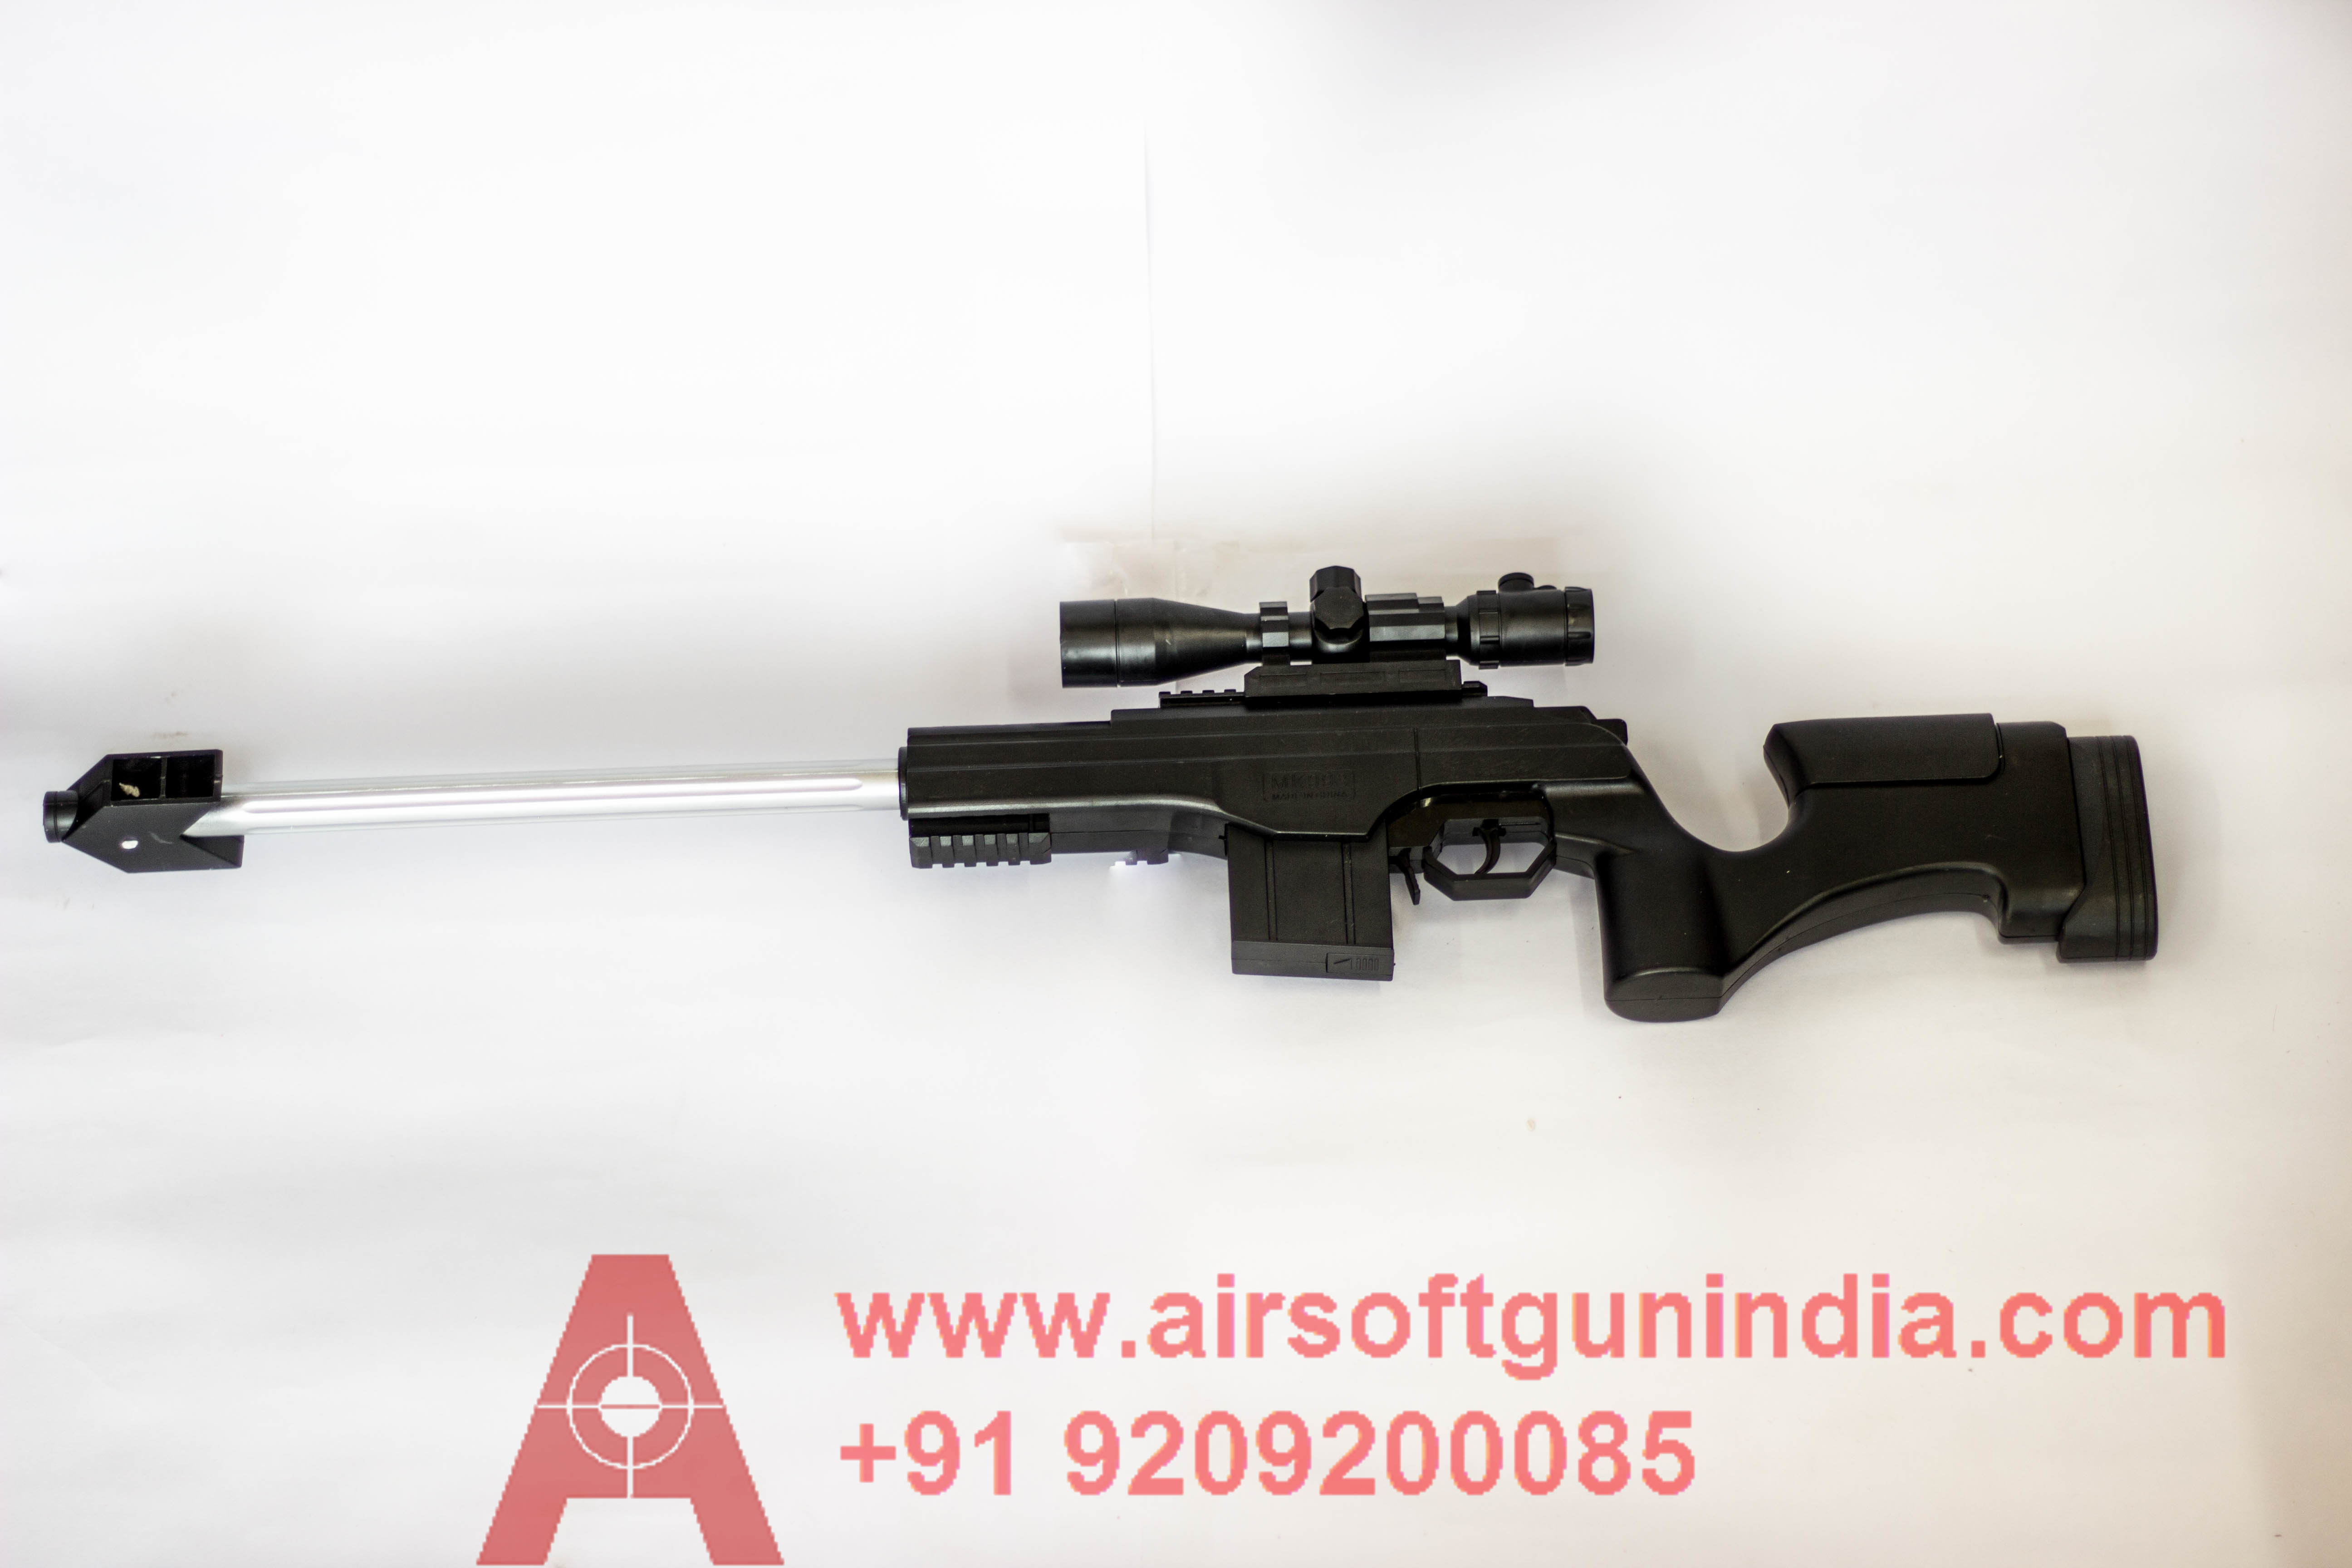 993-1 Sniper Rifle By Airsoft Gun India